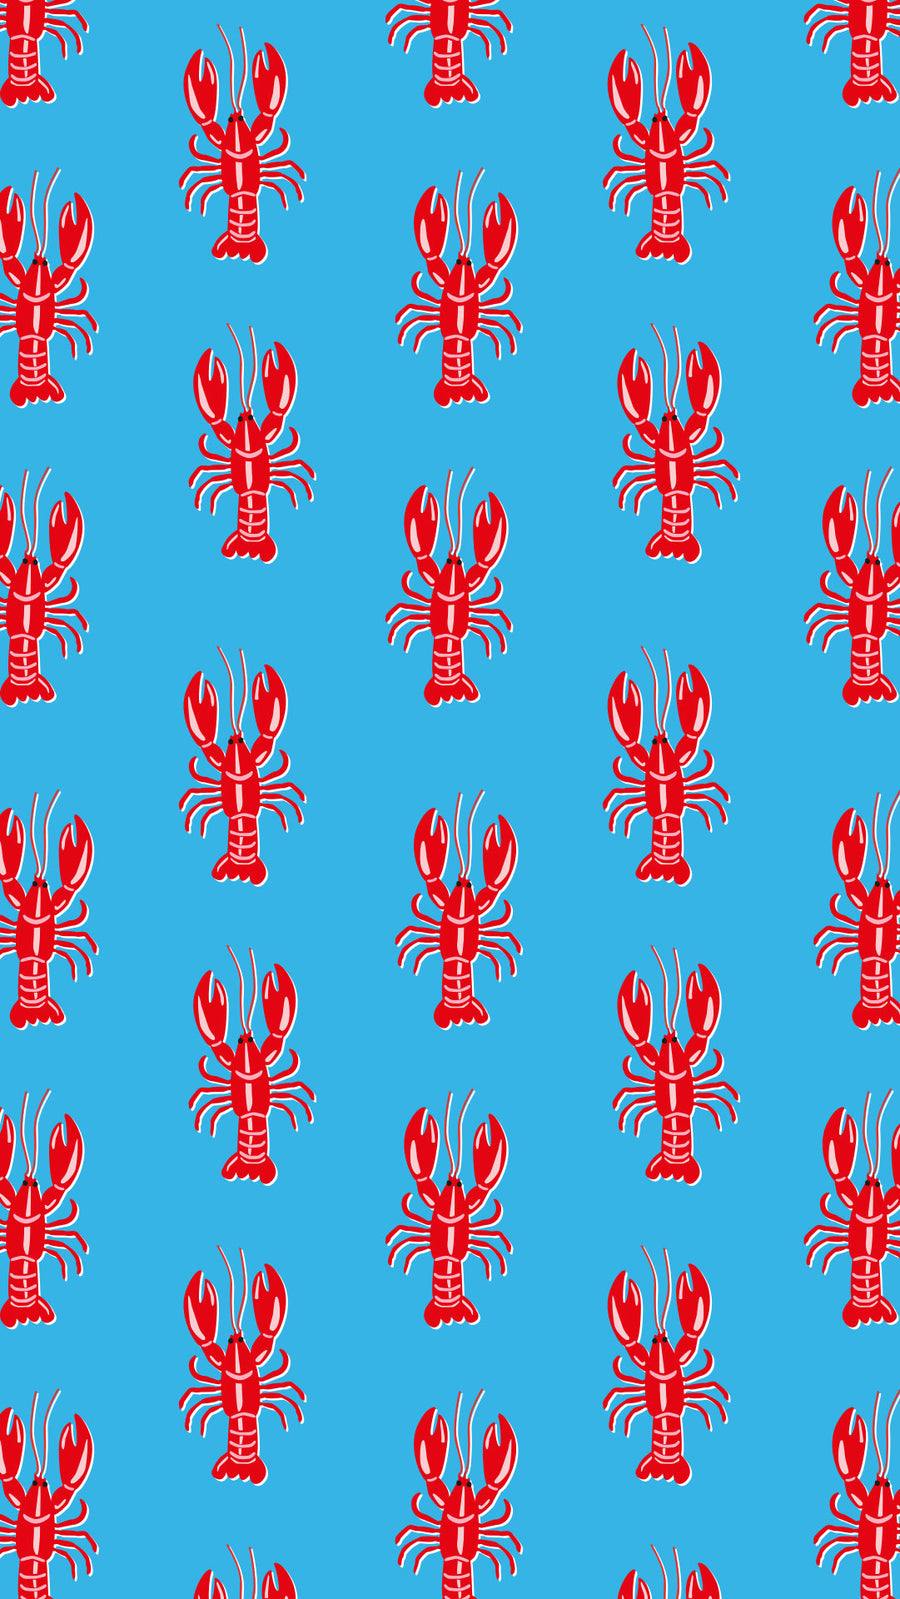 Lobster | Digital Phone Wallpaper